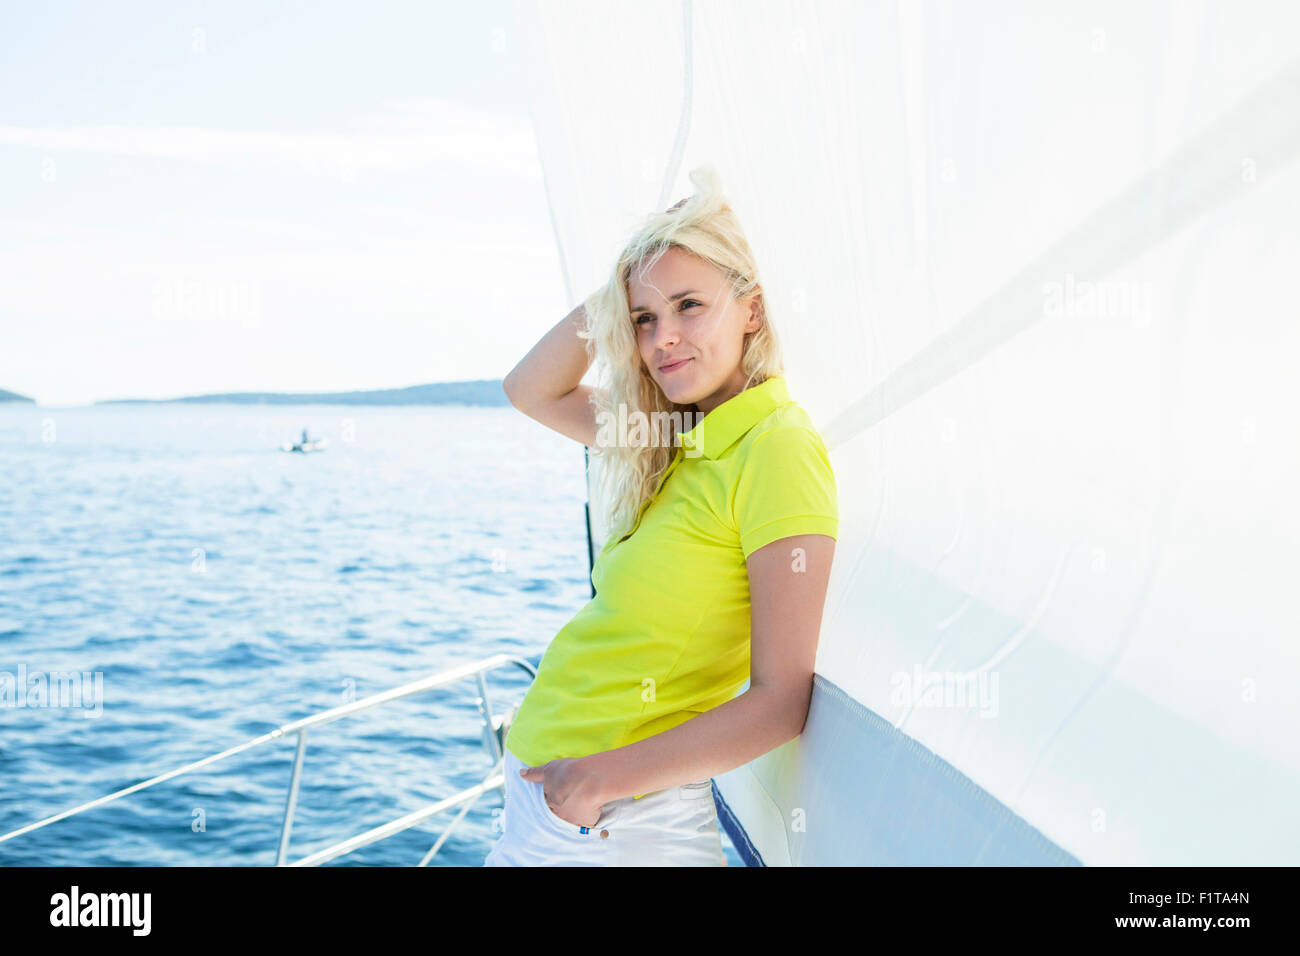 Portrait of woman on sailboat, Adriatic Sea Stock Photo